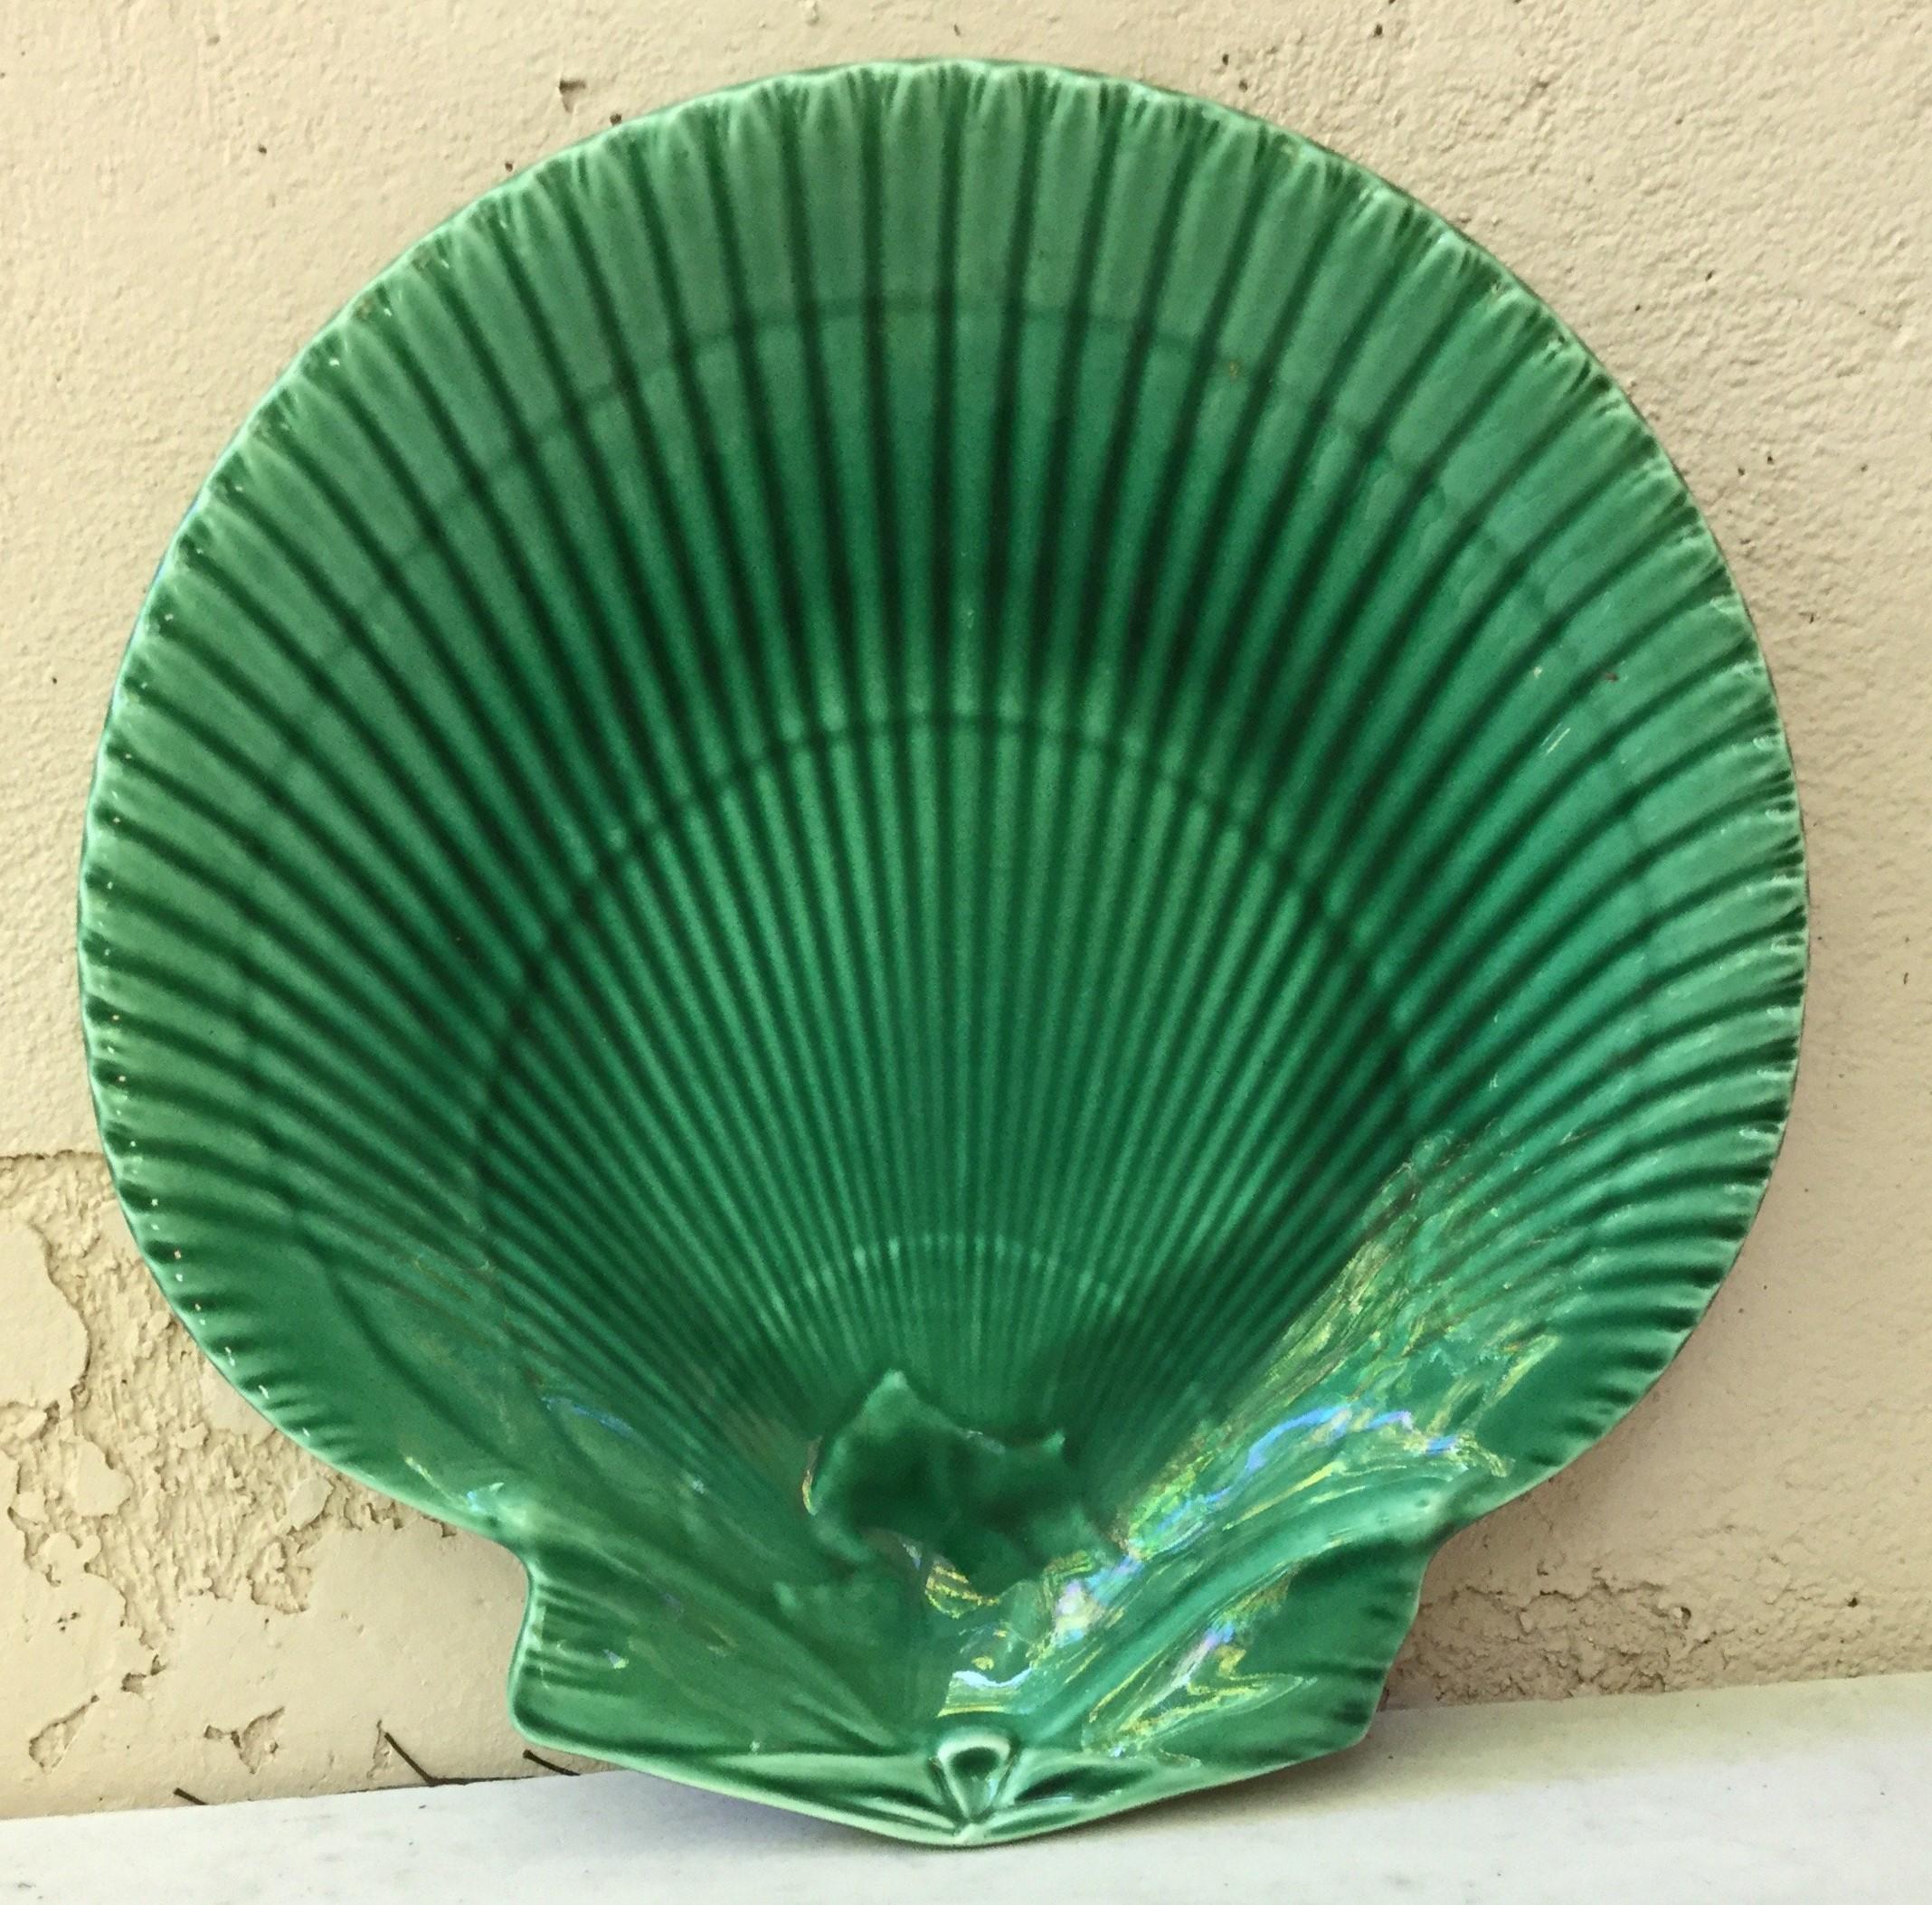 English green Majolica shell plate signed 